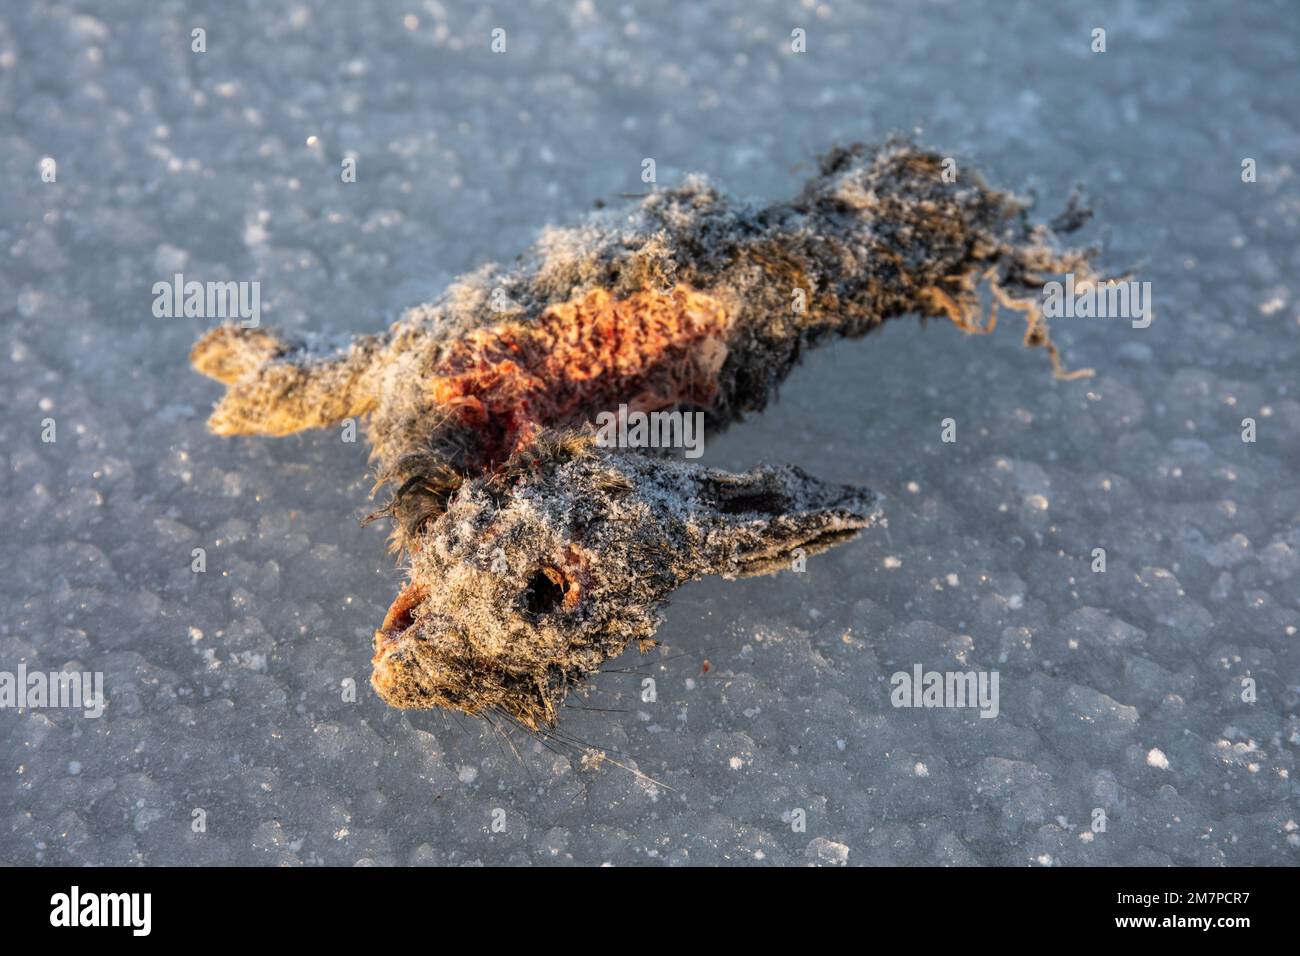 Frozen and partly eaten juvenile European rabbit, Oryctolagus cuniculus, on ice Stock Photo